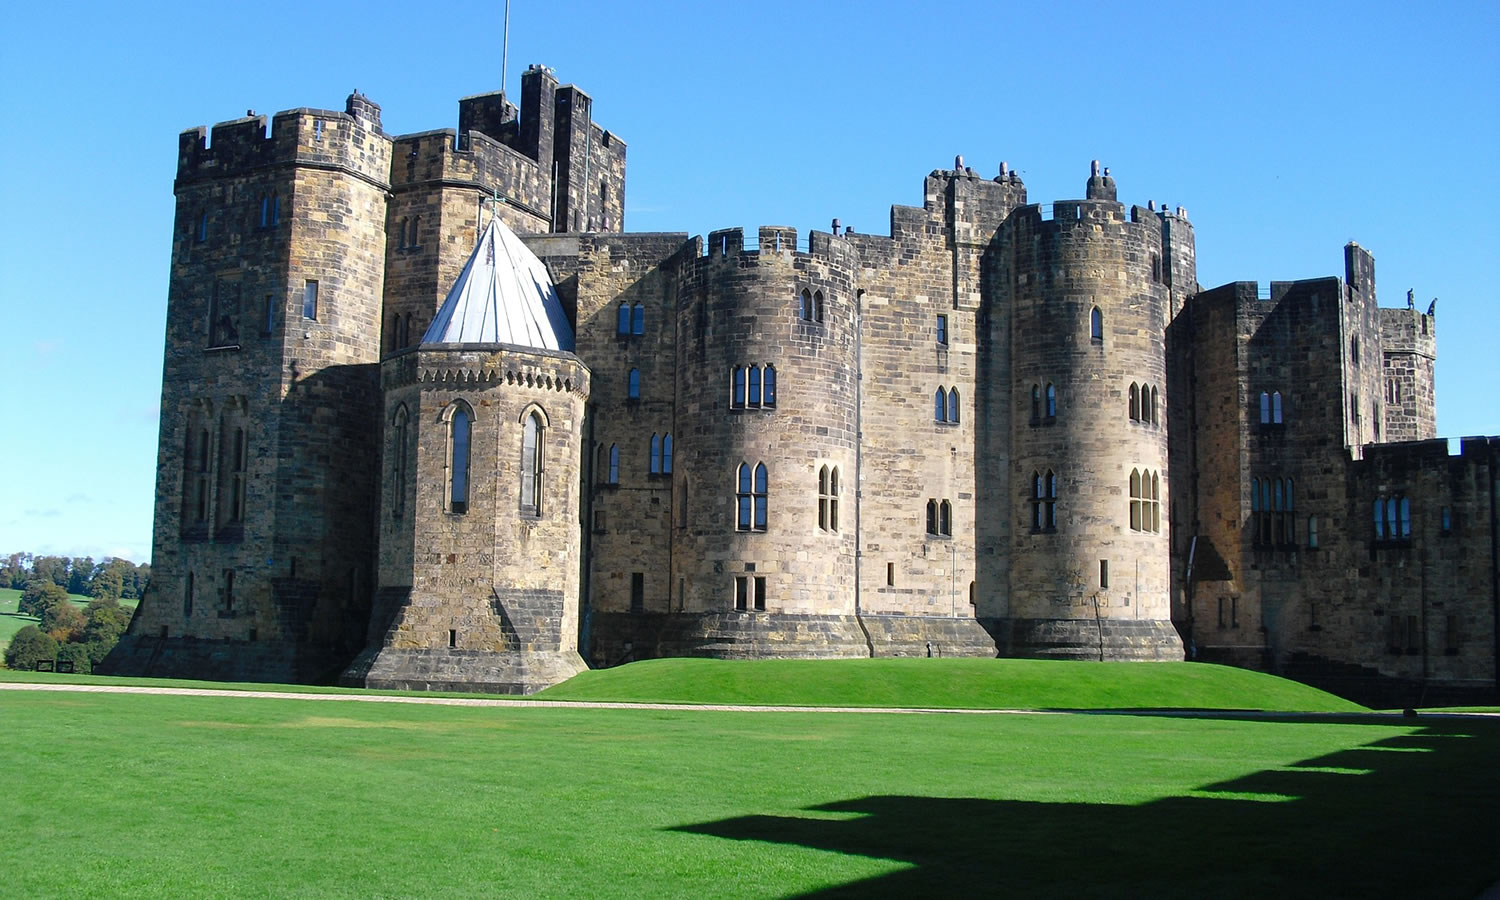 large castle on grass